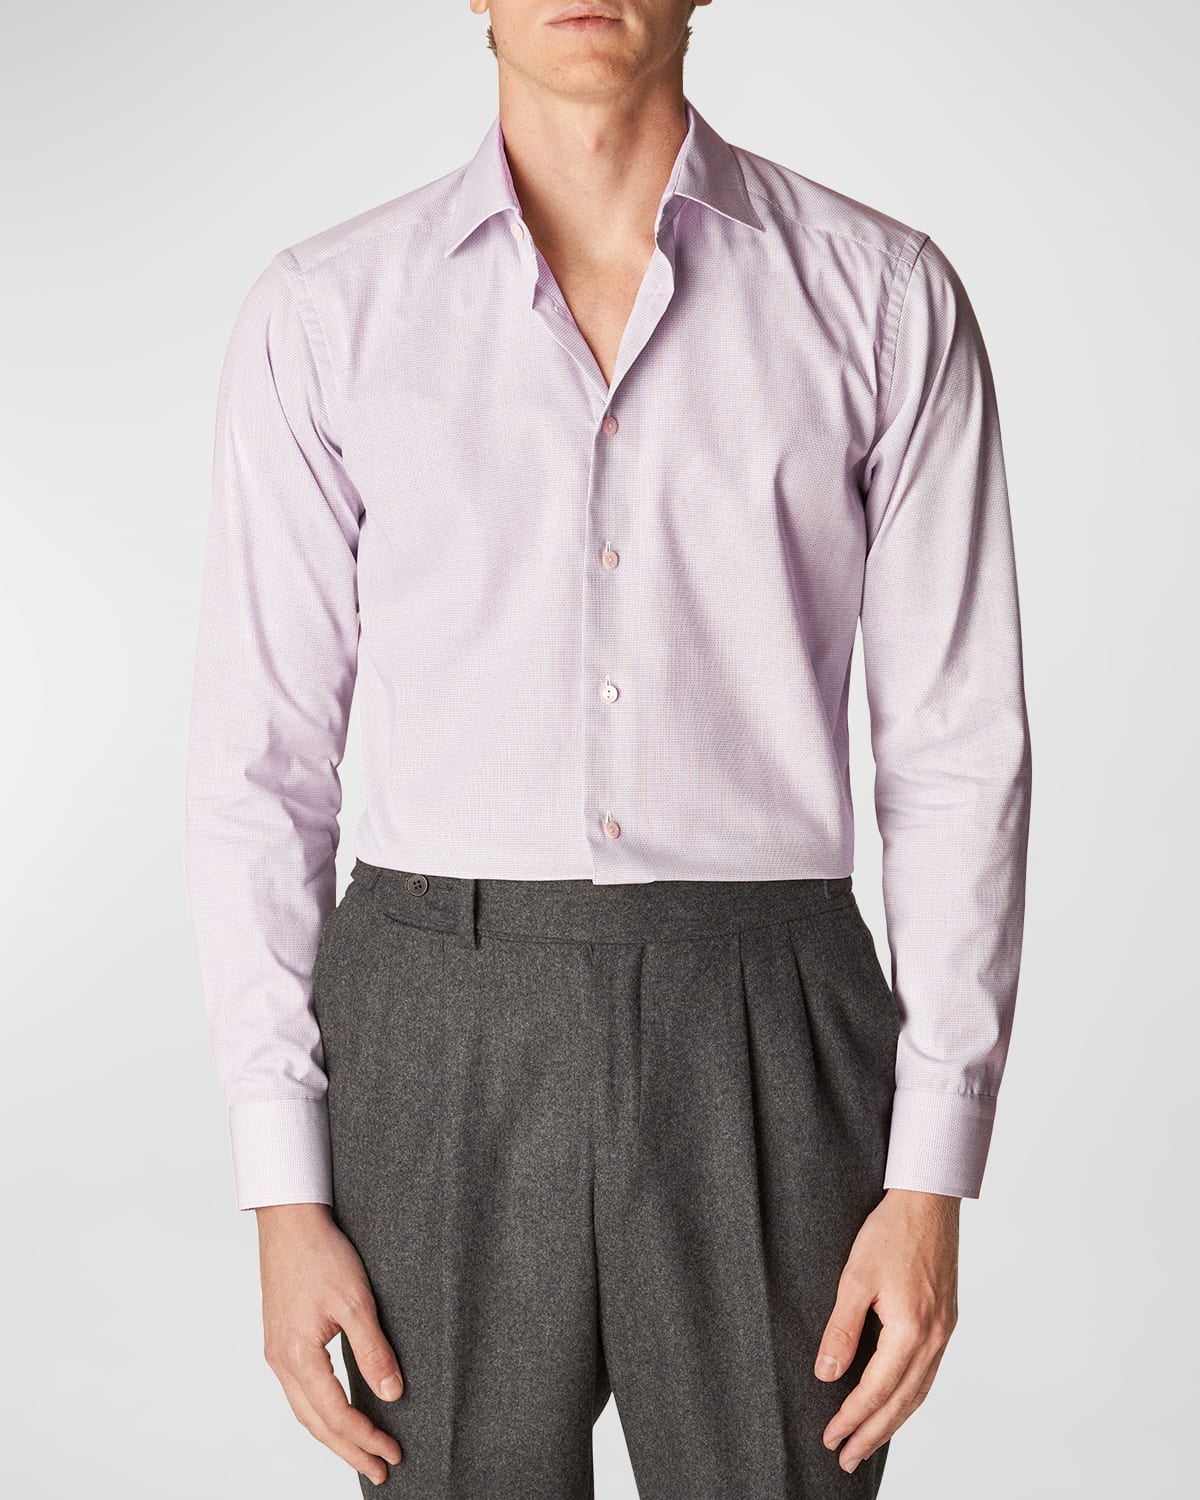 Men's Contemporary Fit Geometric Print Dress Shirt